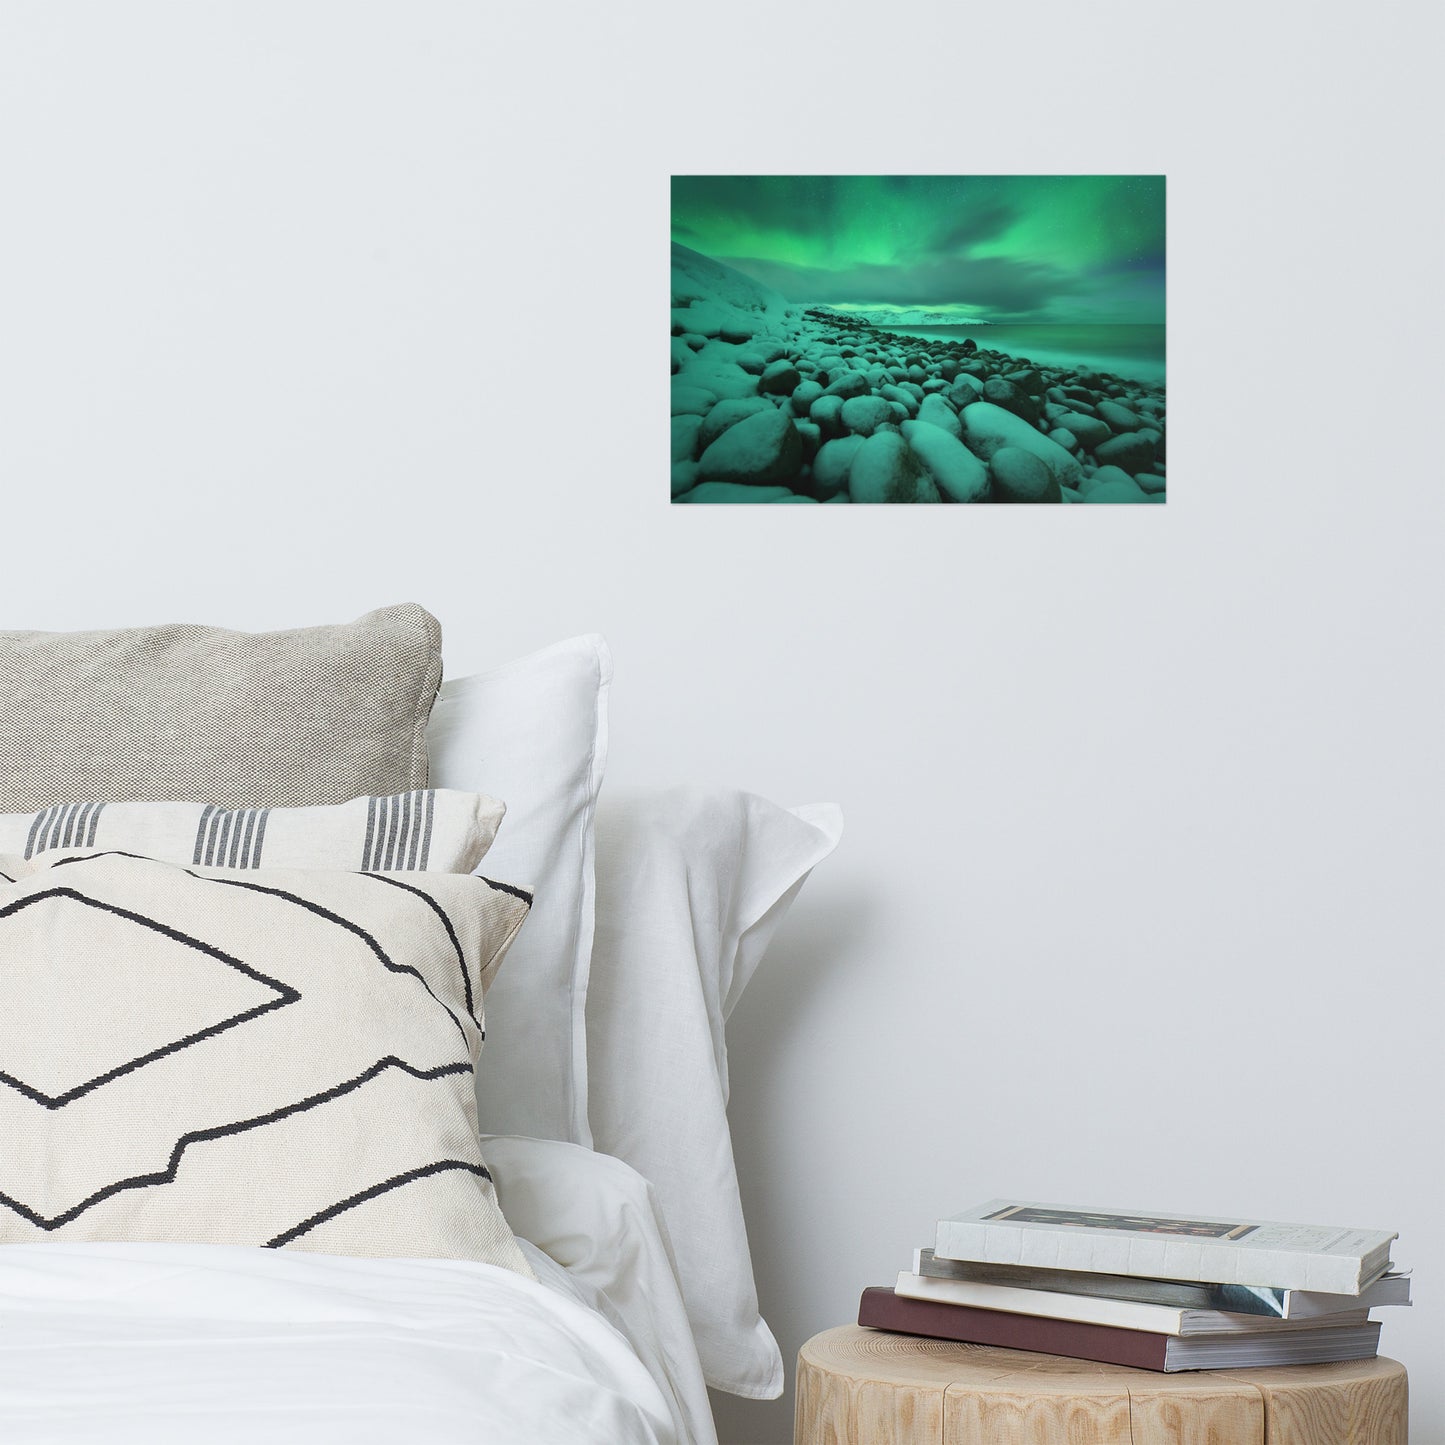 Bedroom Art Over Bed: Aurora Borealis Over Ocean in Teriberka Night - Northern Lights - Seascape - Rural / Country Style Landscape / Nature Loose / Unframed / Frameless / Frameable Photograph Wall Art Print - Artwork